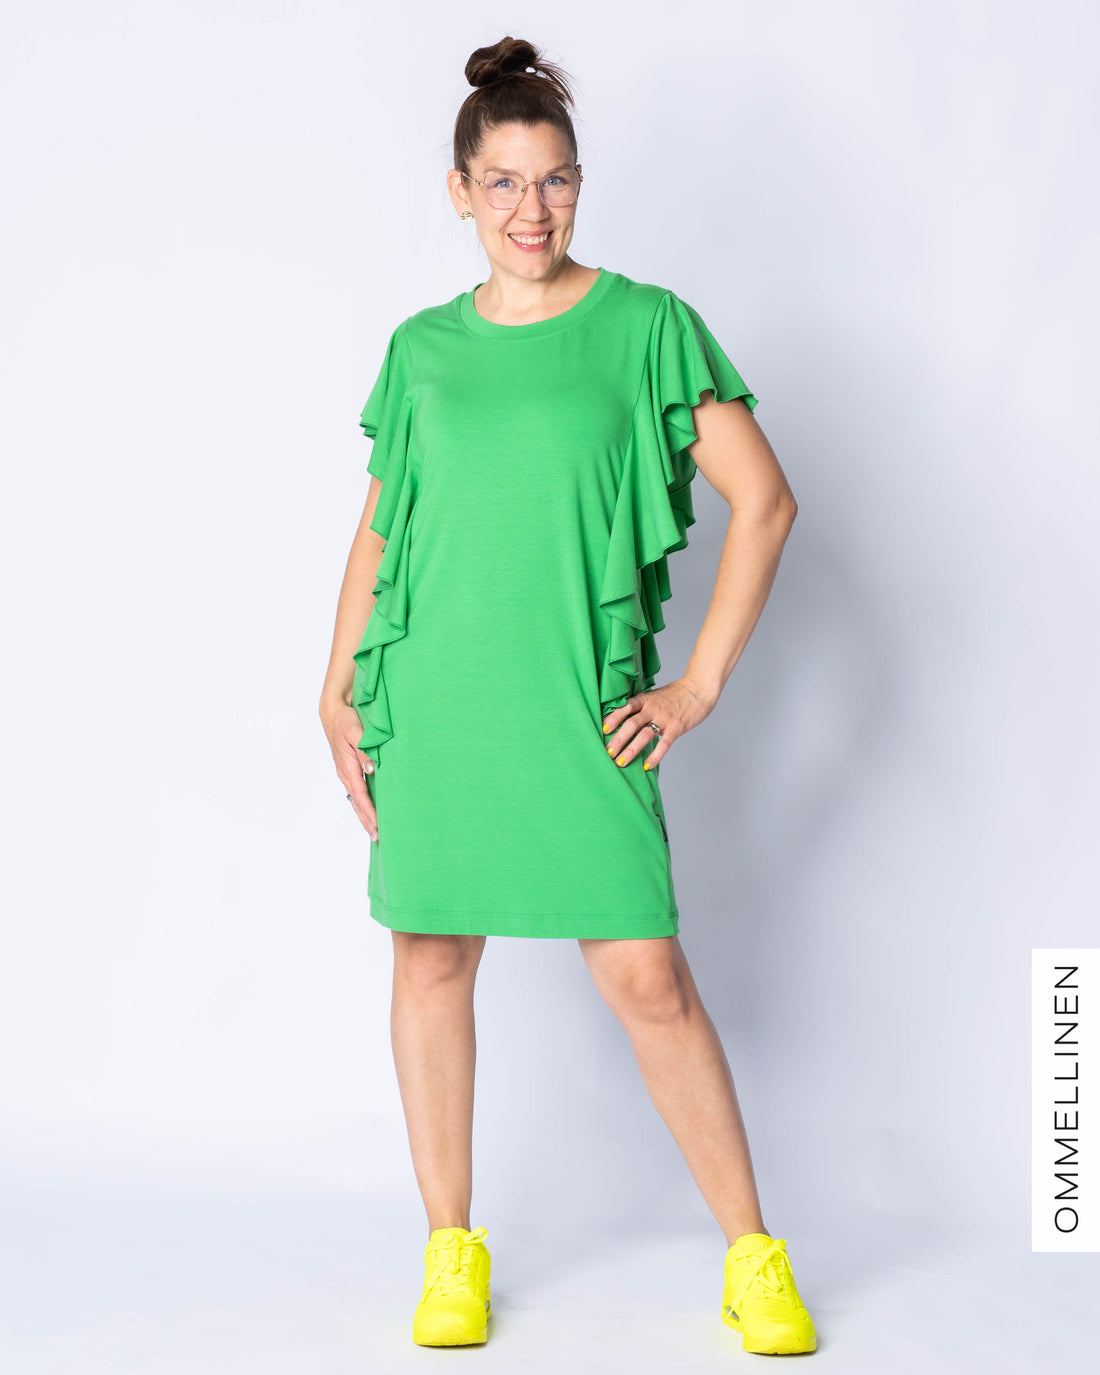 FRILLA dress, green